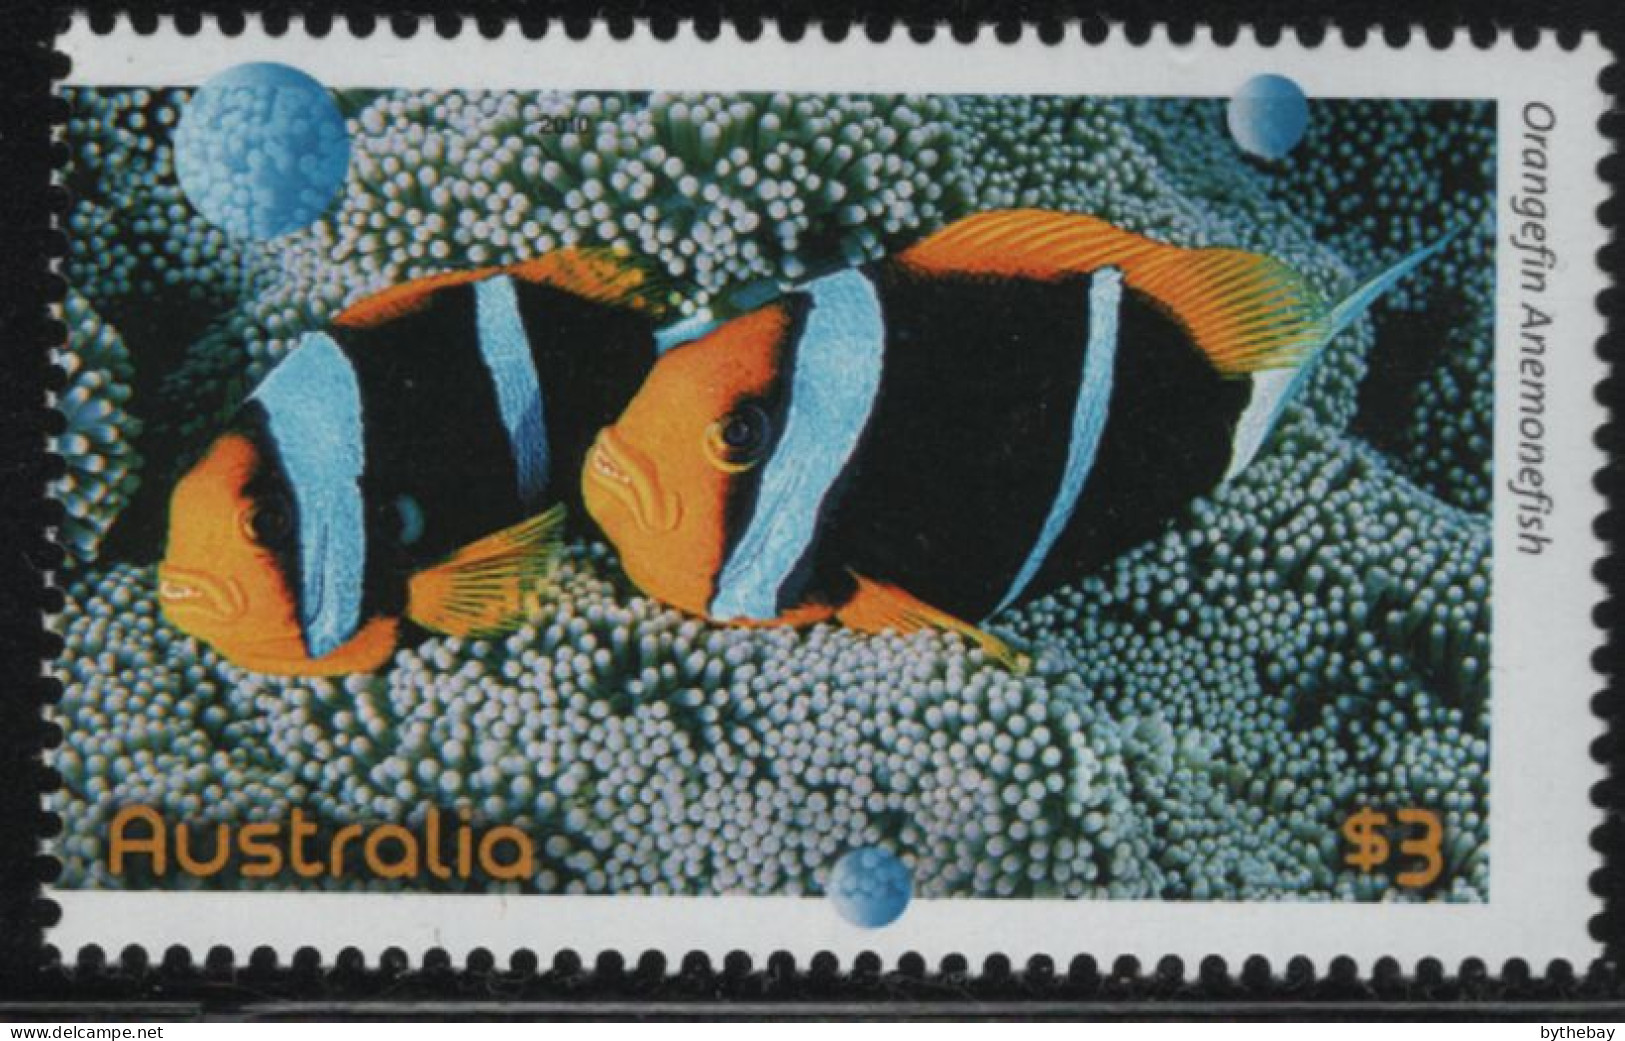 Australia 2010 MNH Sc 3277 $3 Orangefin Anemonefish - Mint Stamps